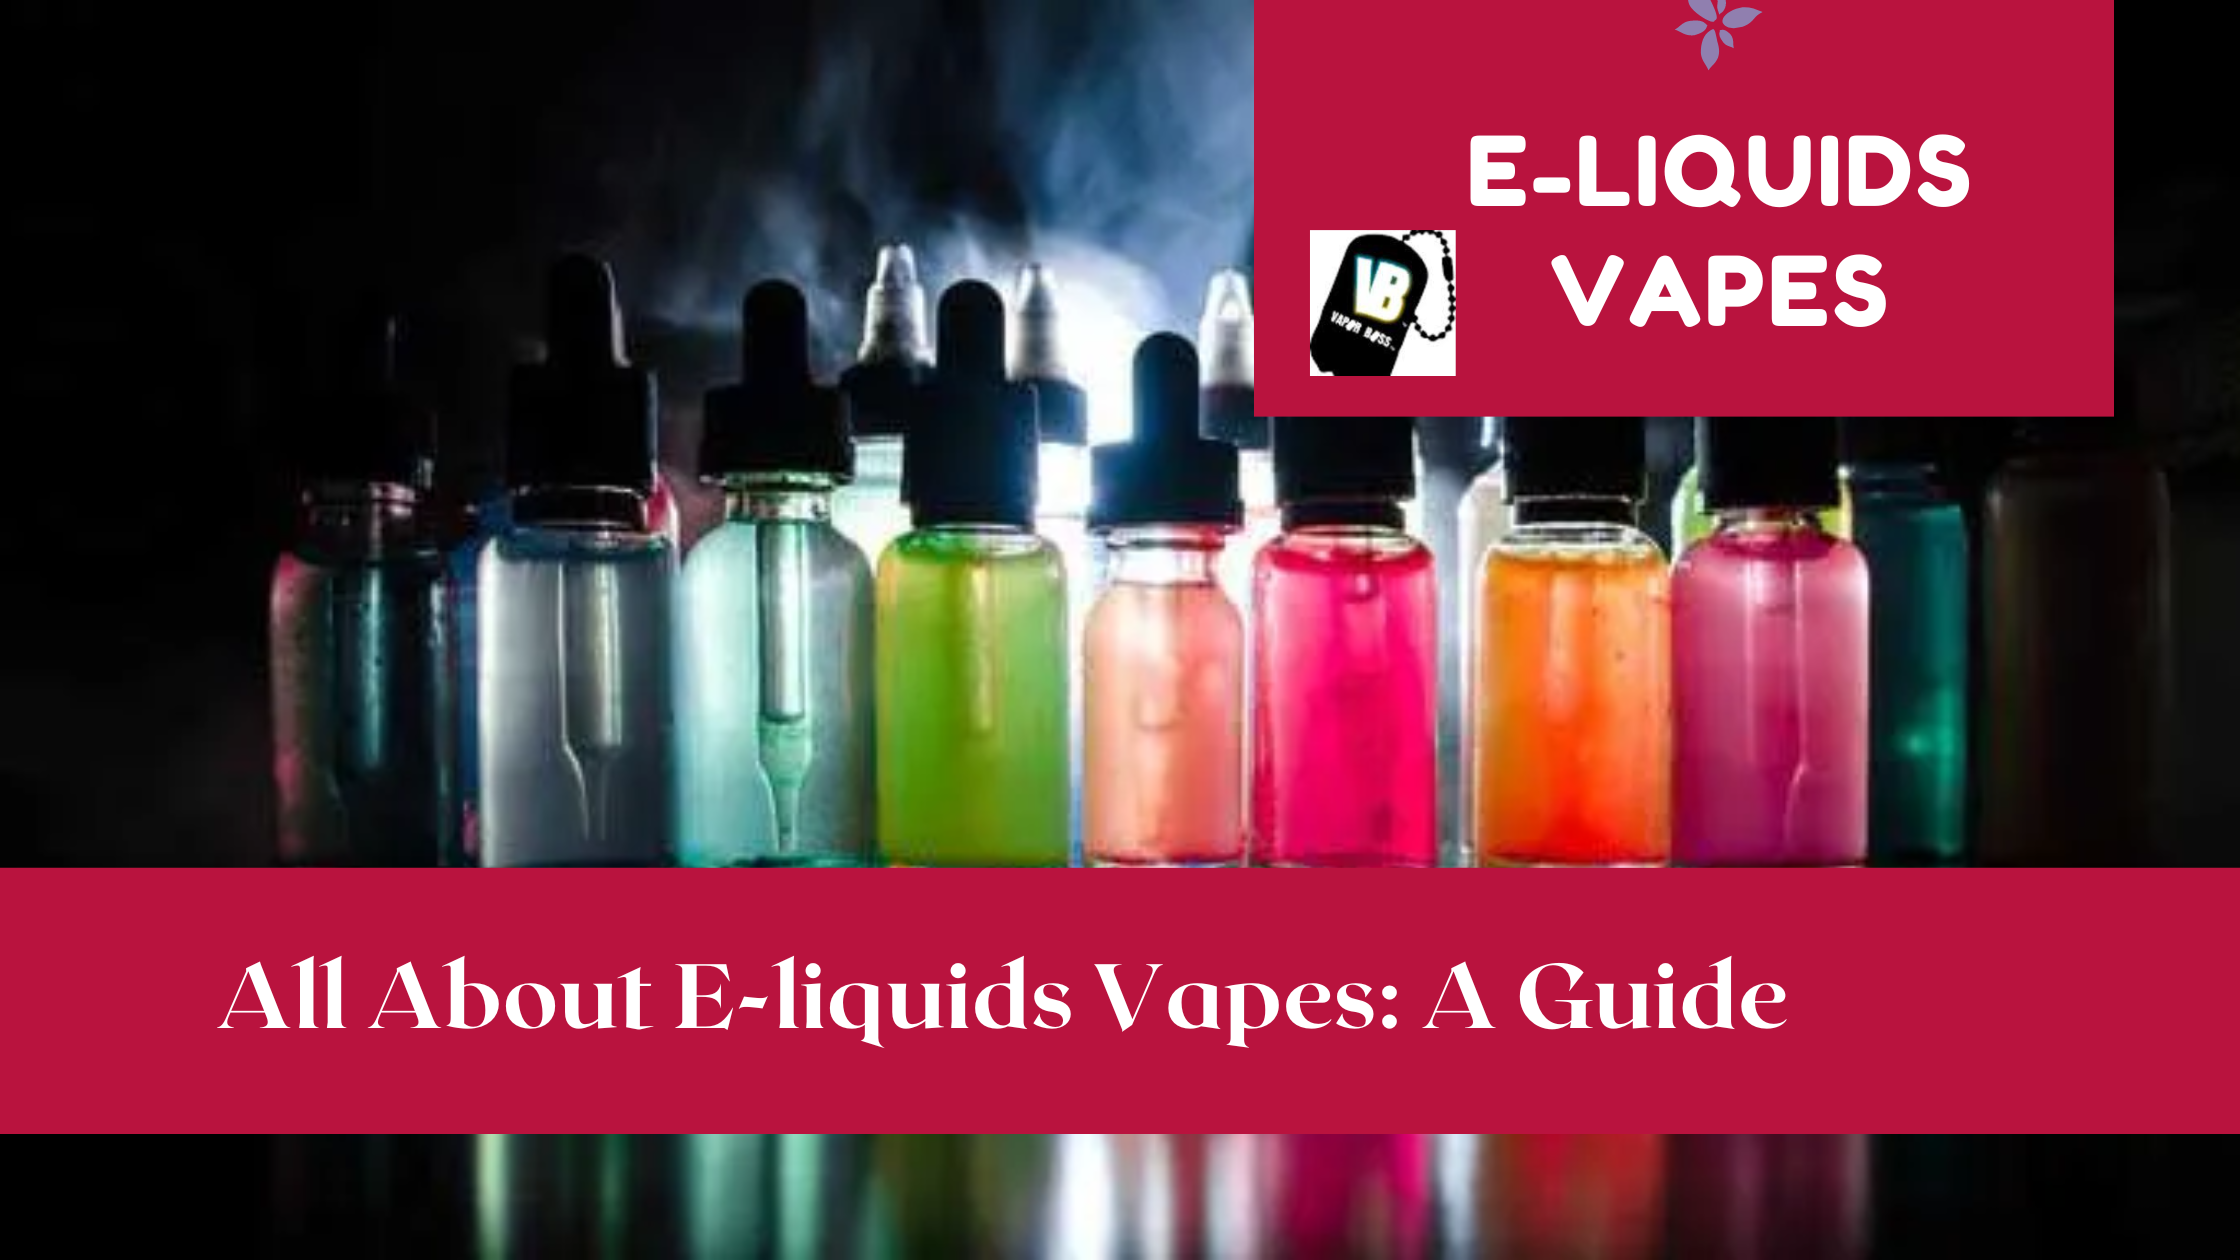   All About E-liquids Vapes: A Guide